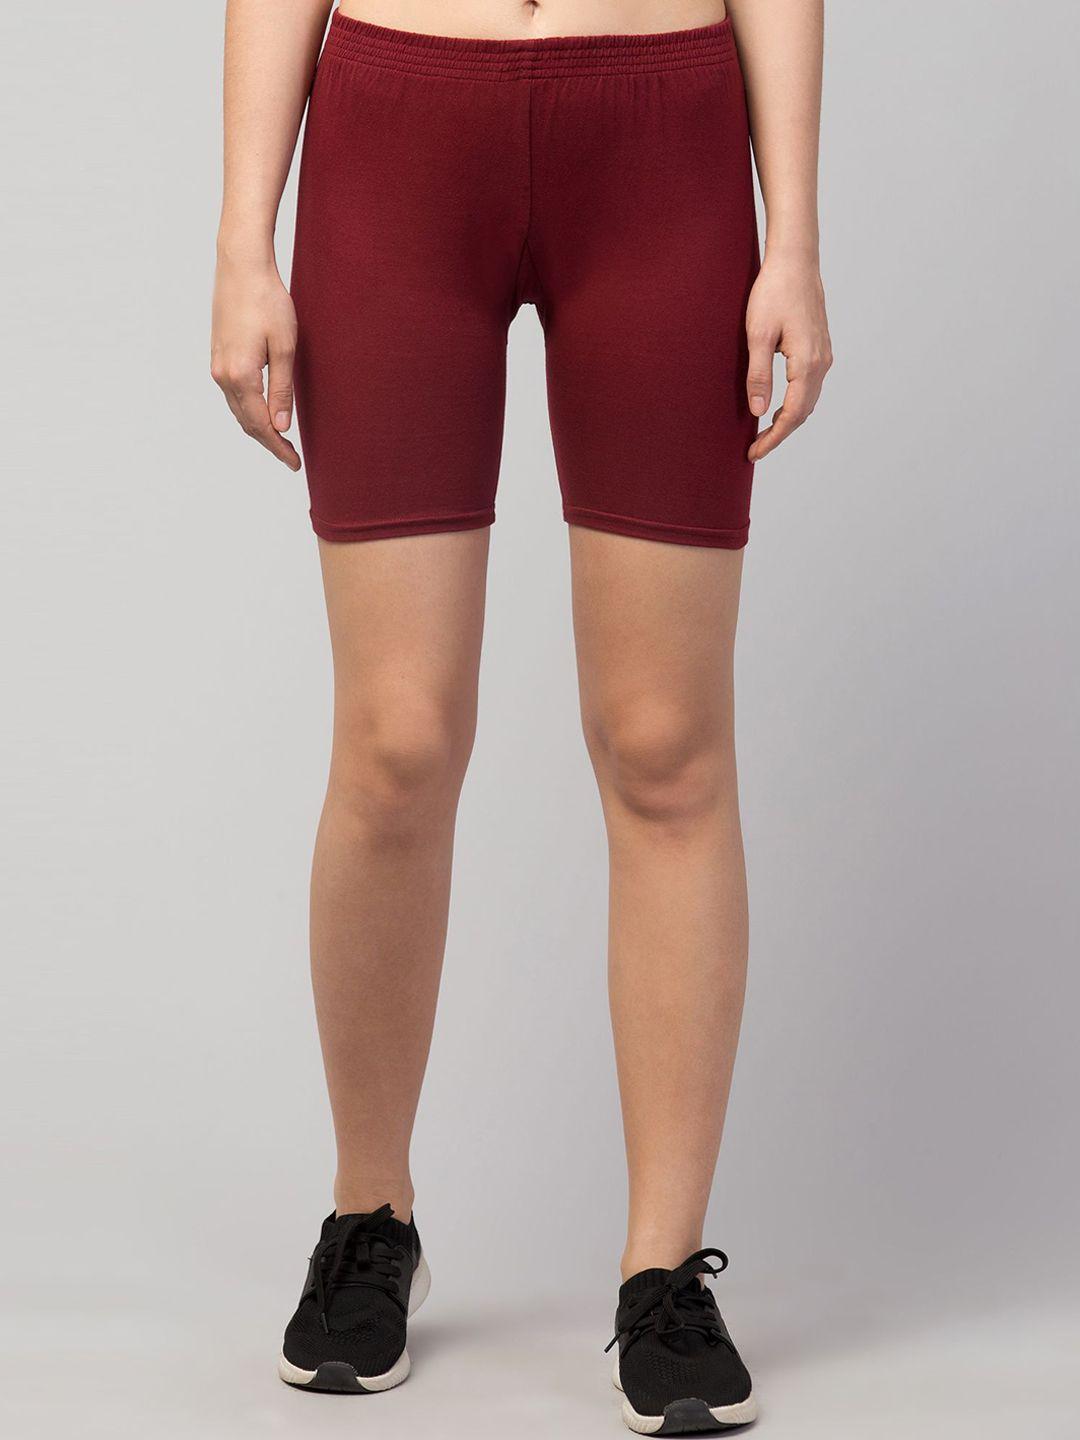 apraa & parma women maroon skinny fit cycling sports shorts